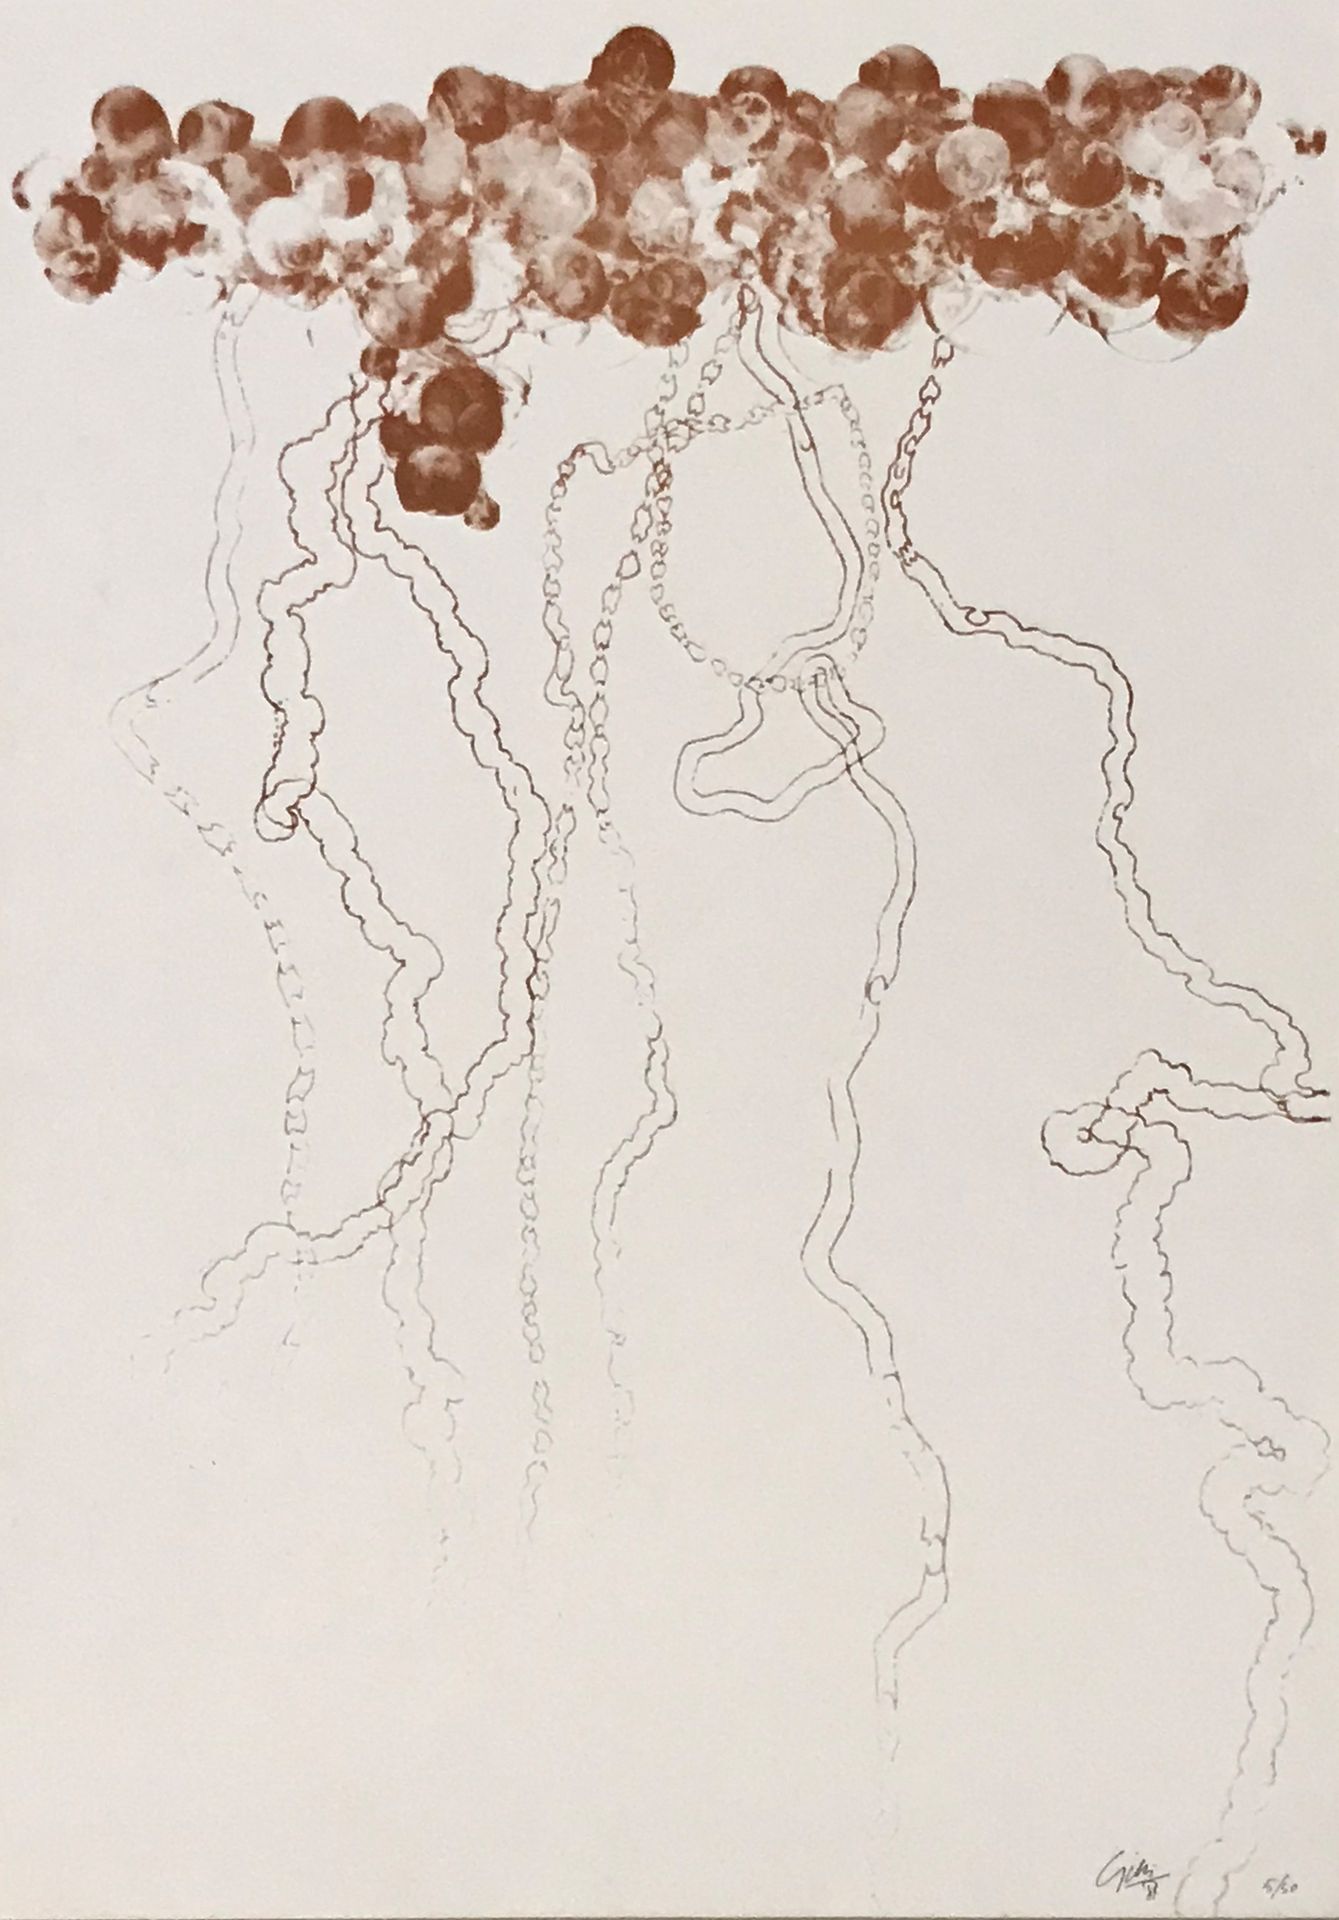 CLAUDE GILLI (1938-2015) 蜗牛的痕迹》，1981年
胶版印刷，有签名和编号的5/50
57 x 40 cm